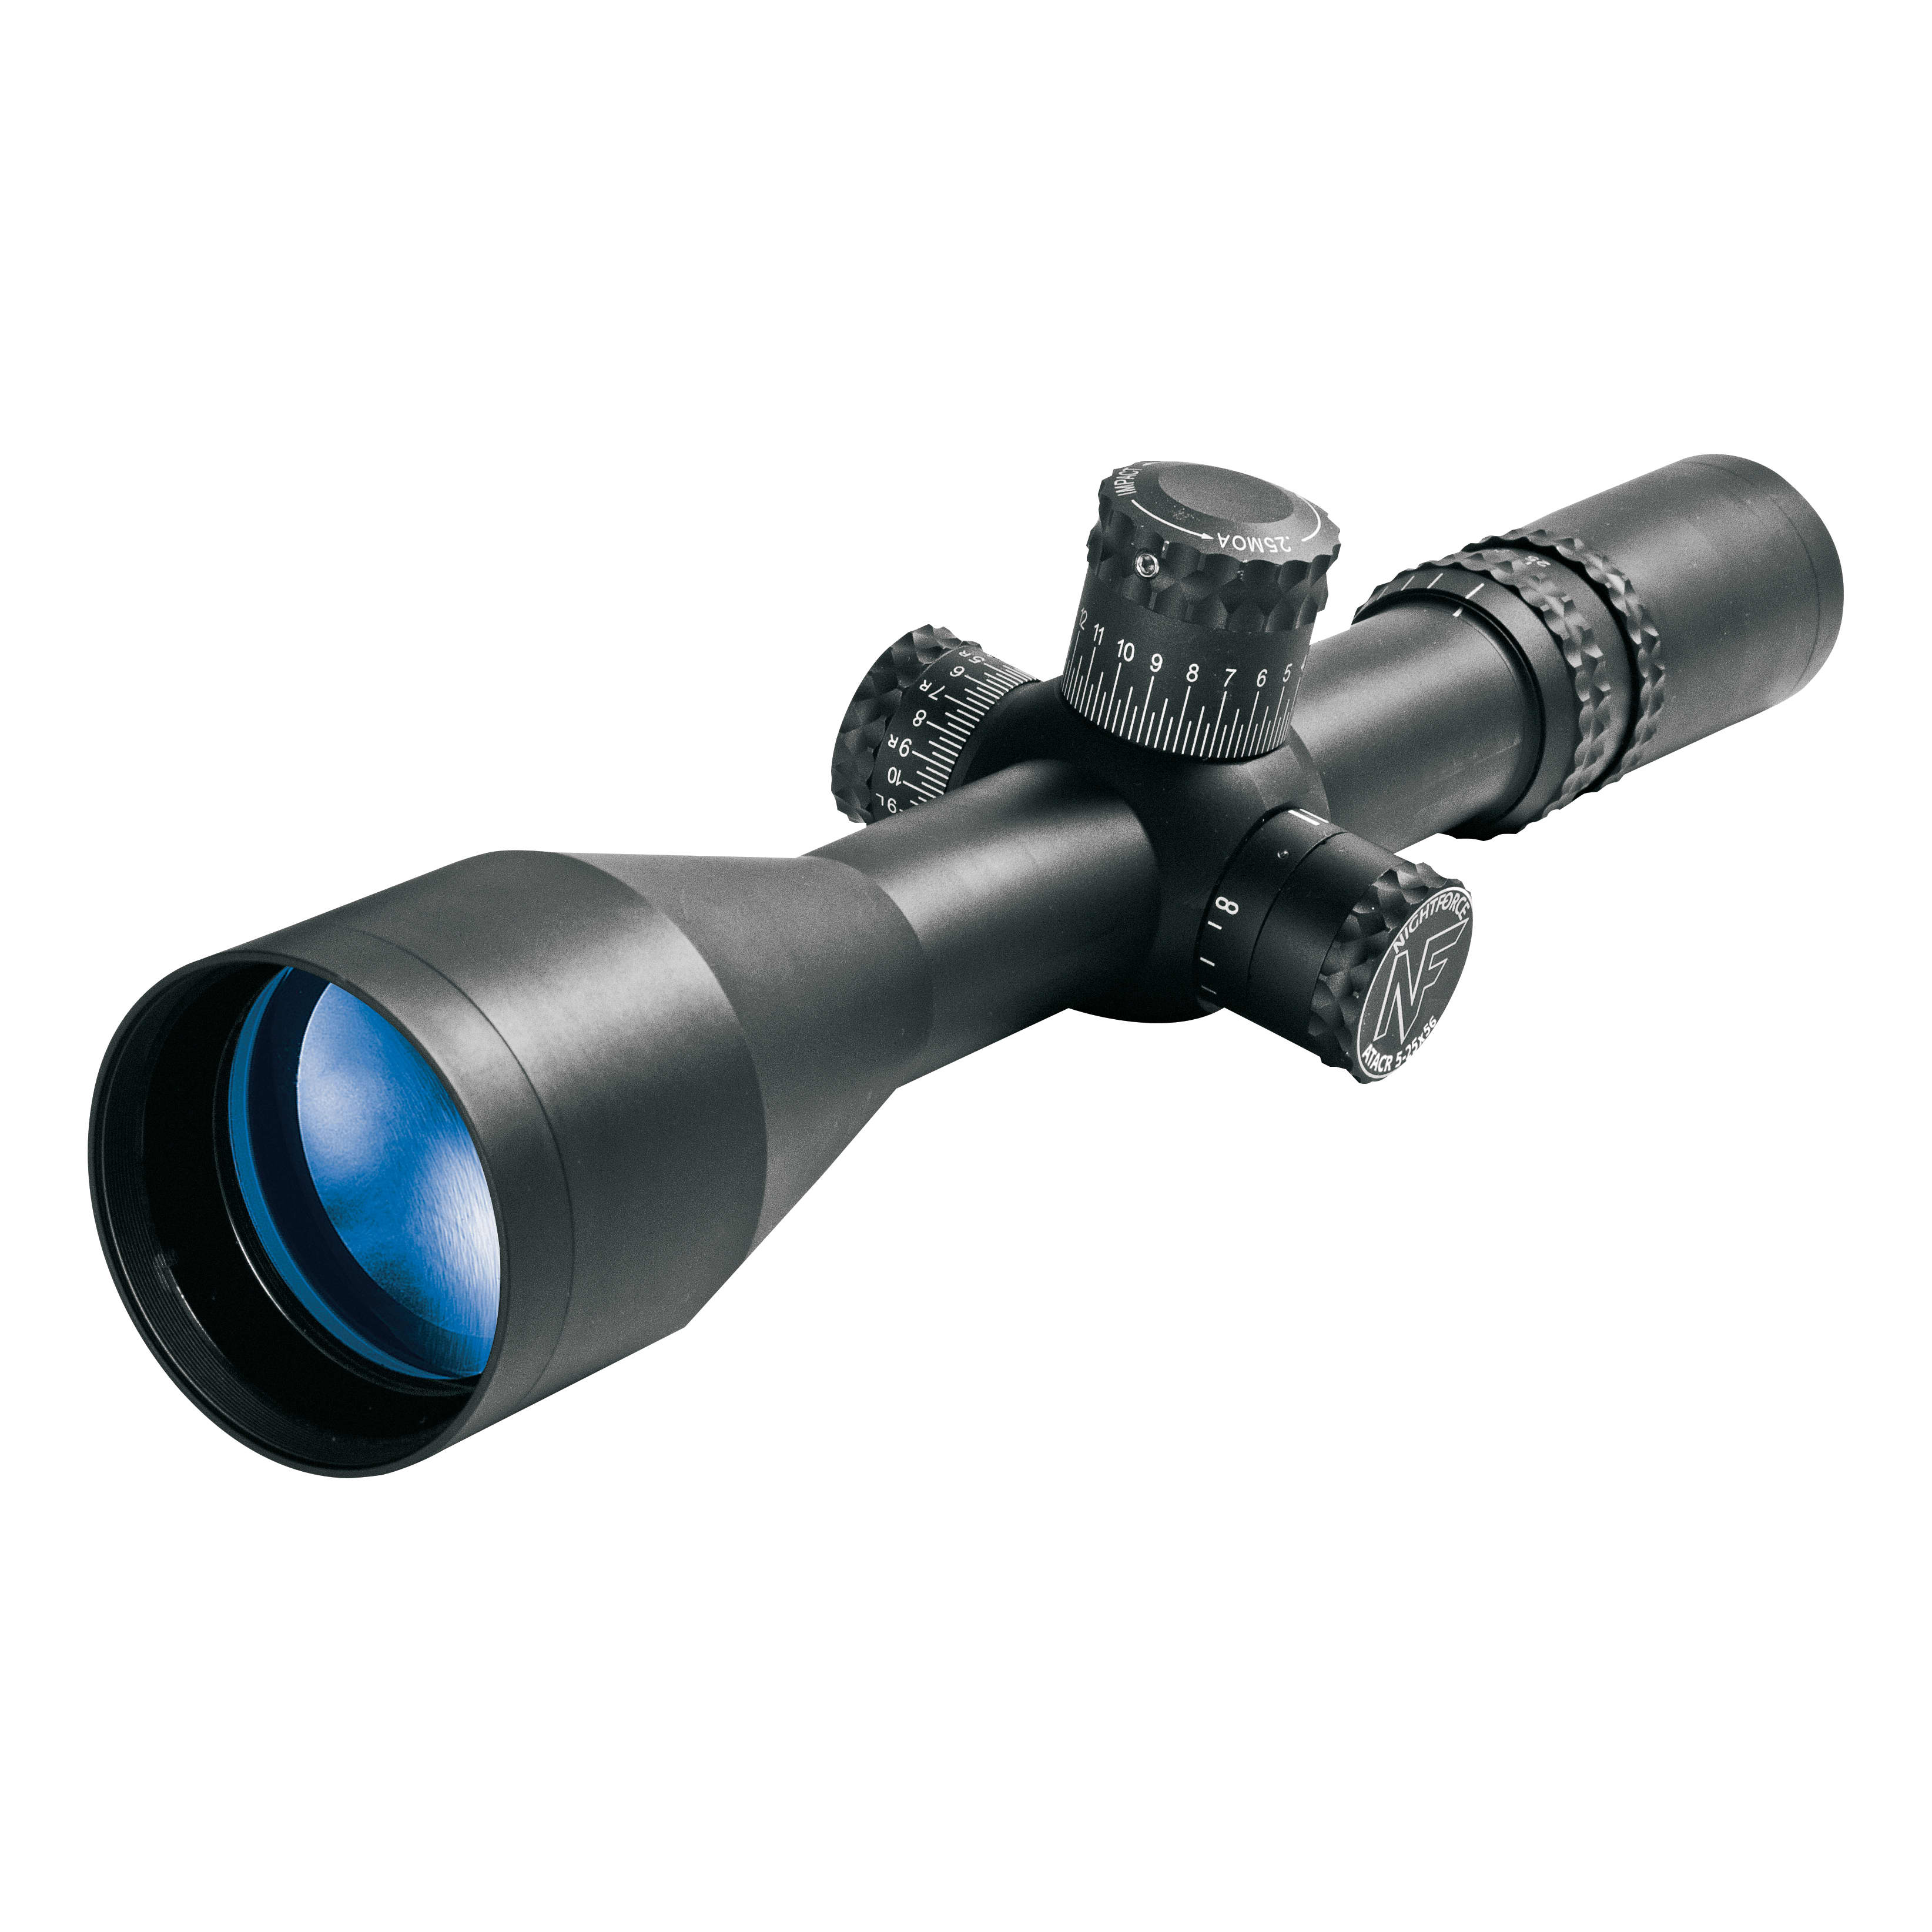 Nightforce 34mm ATACR® Riflescope - 5-25x56mm - MOAR - Front View